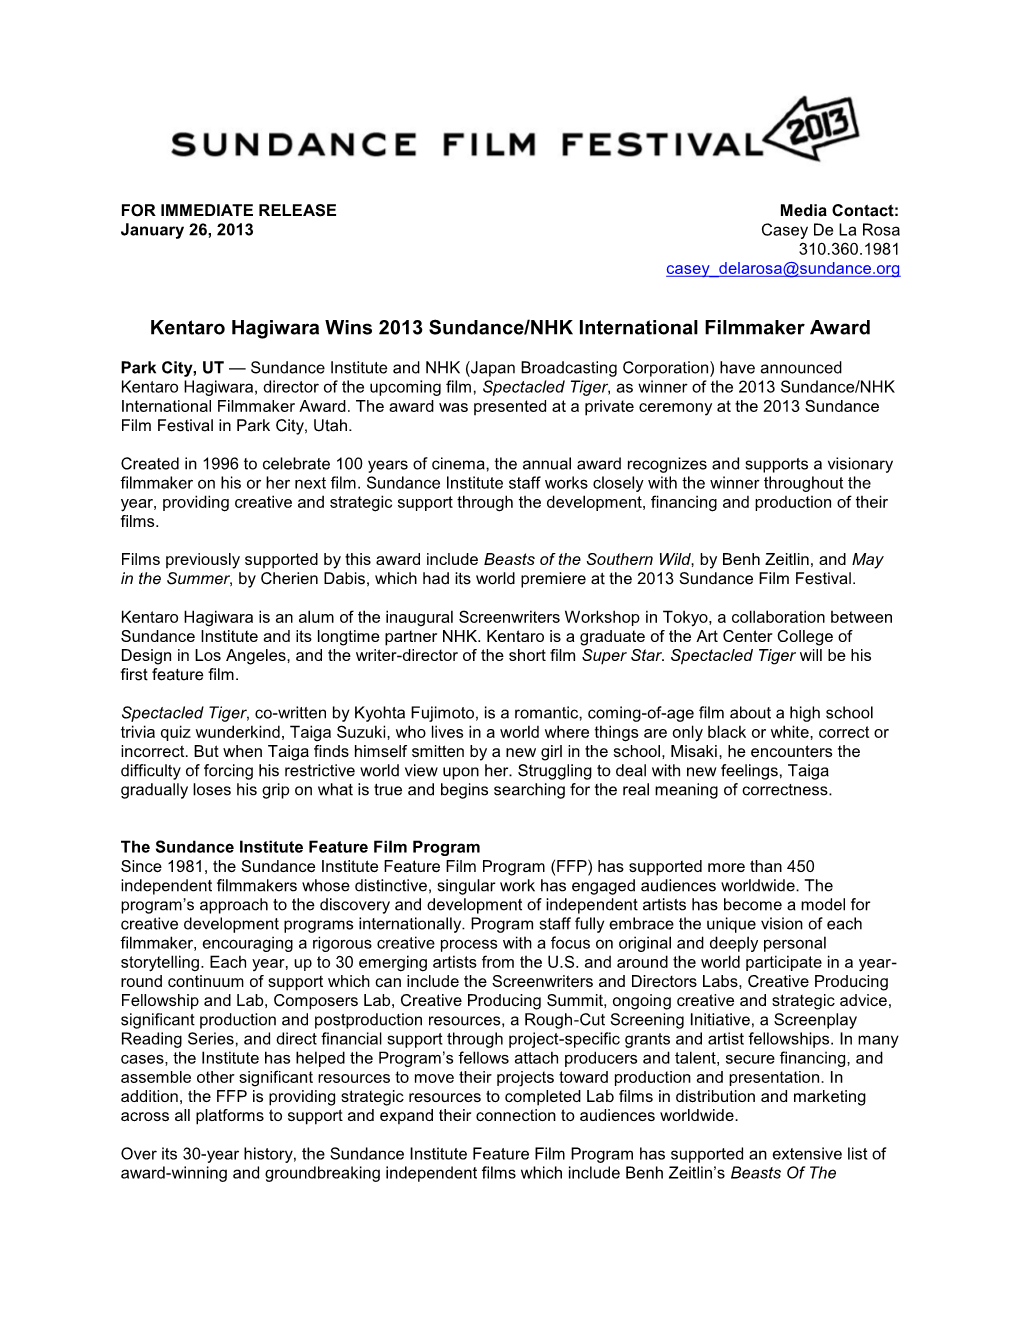 Kentaro Hagiwara Wins 2013 Sundance/NHK International Filmmaker Award